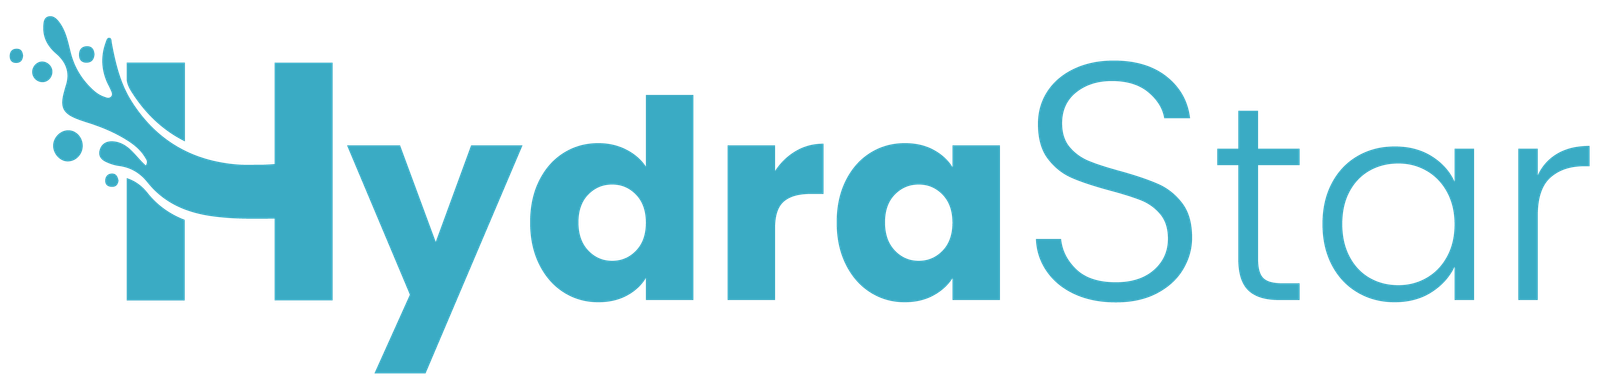 Hydrastar Logo